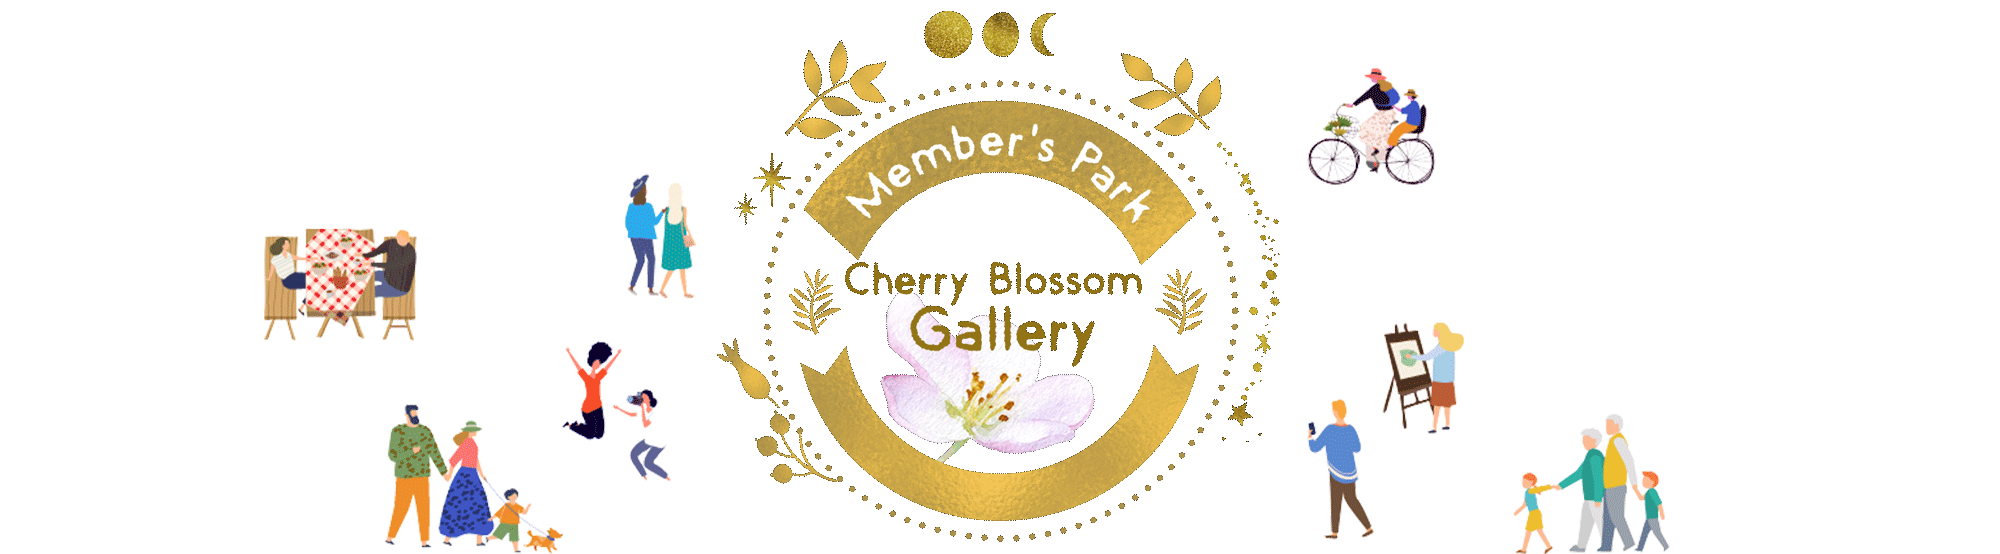 Cherry Blossom Gallery logo